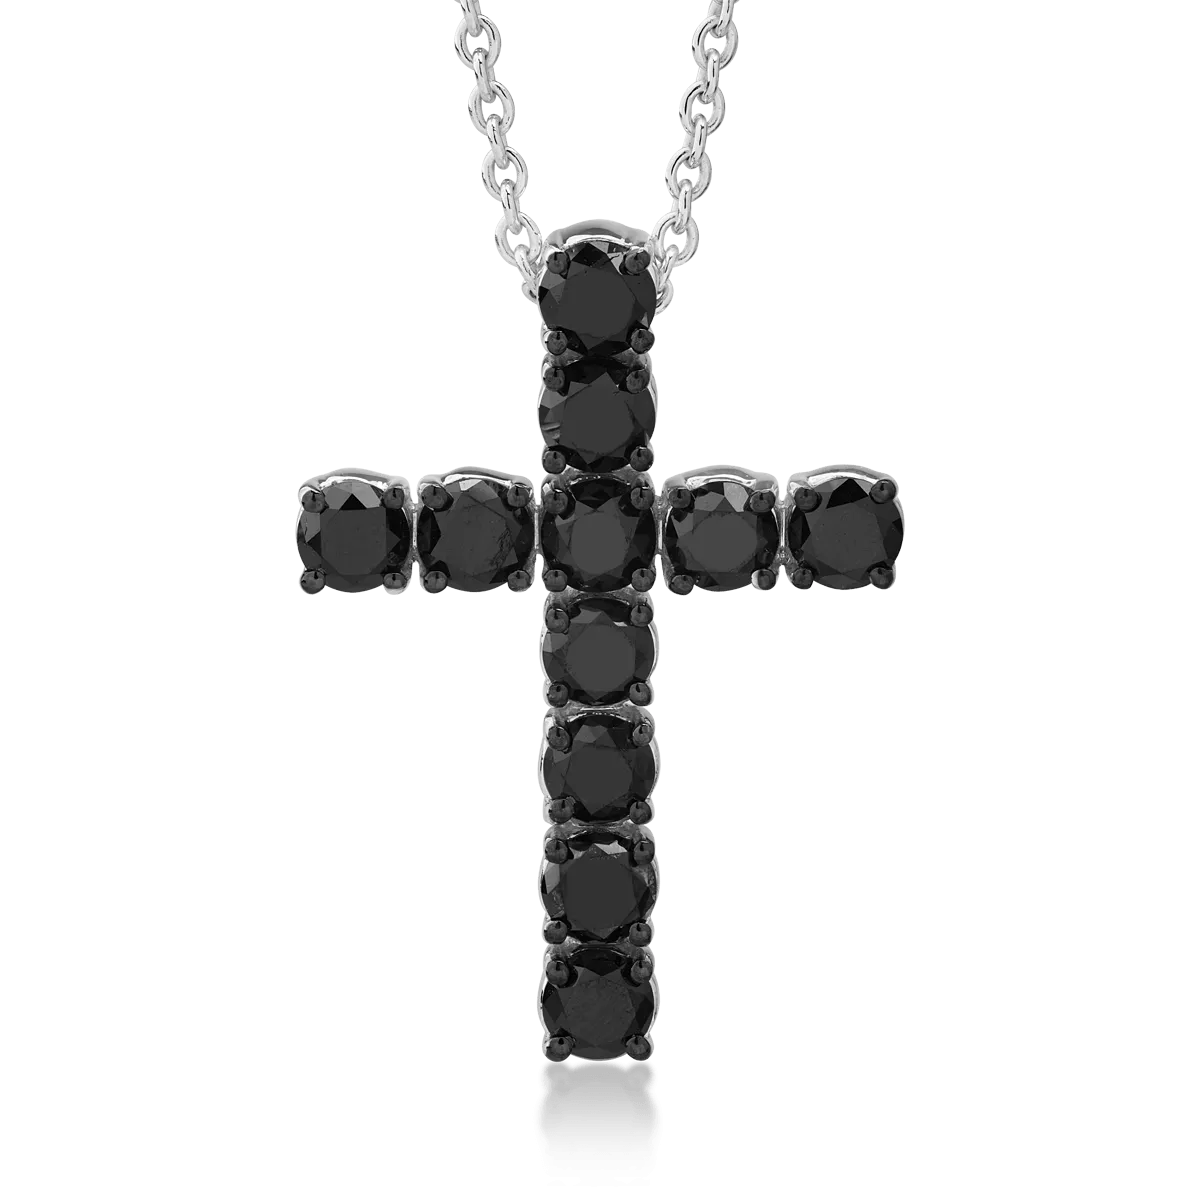 18K white gold cross pendant necklace with 3.3ct black diamonds